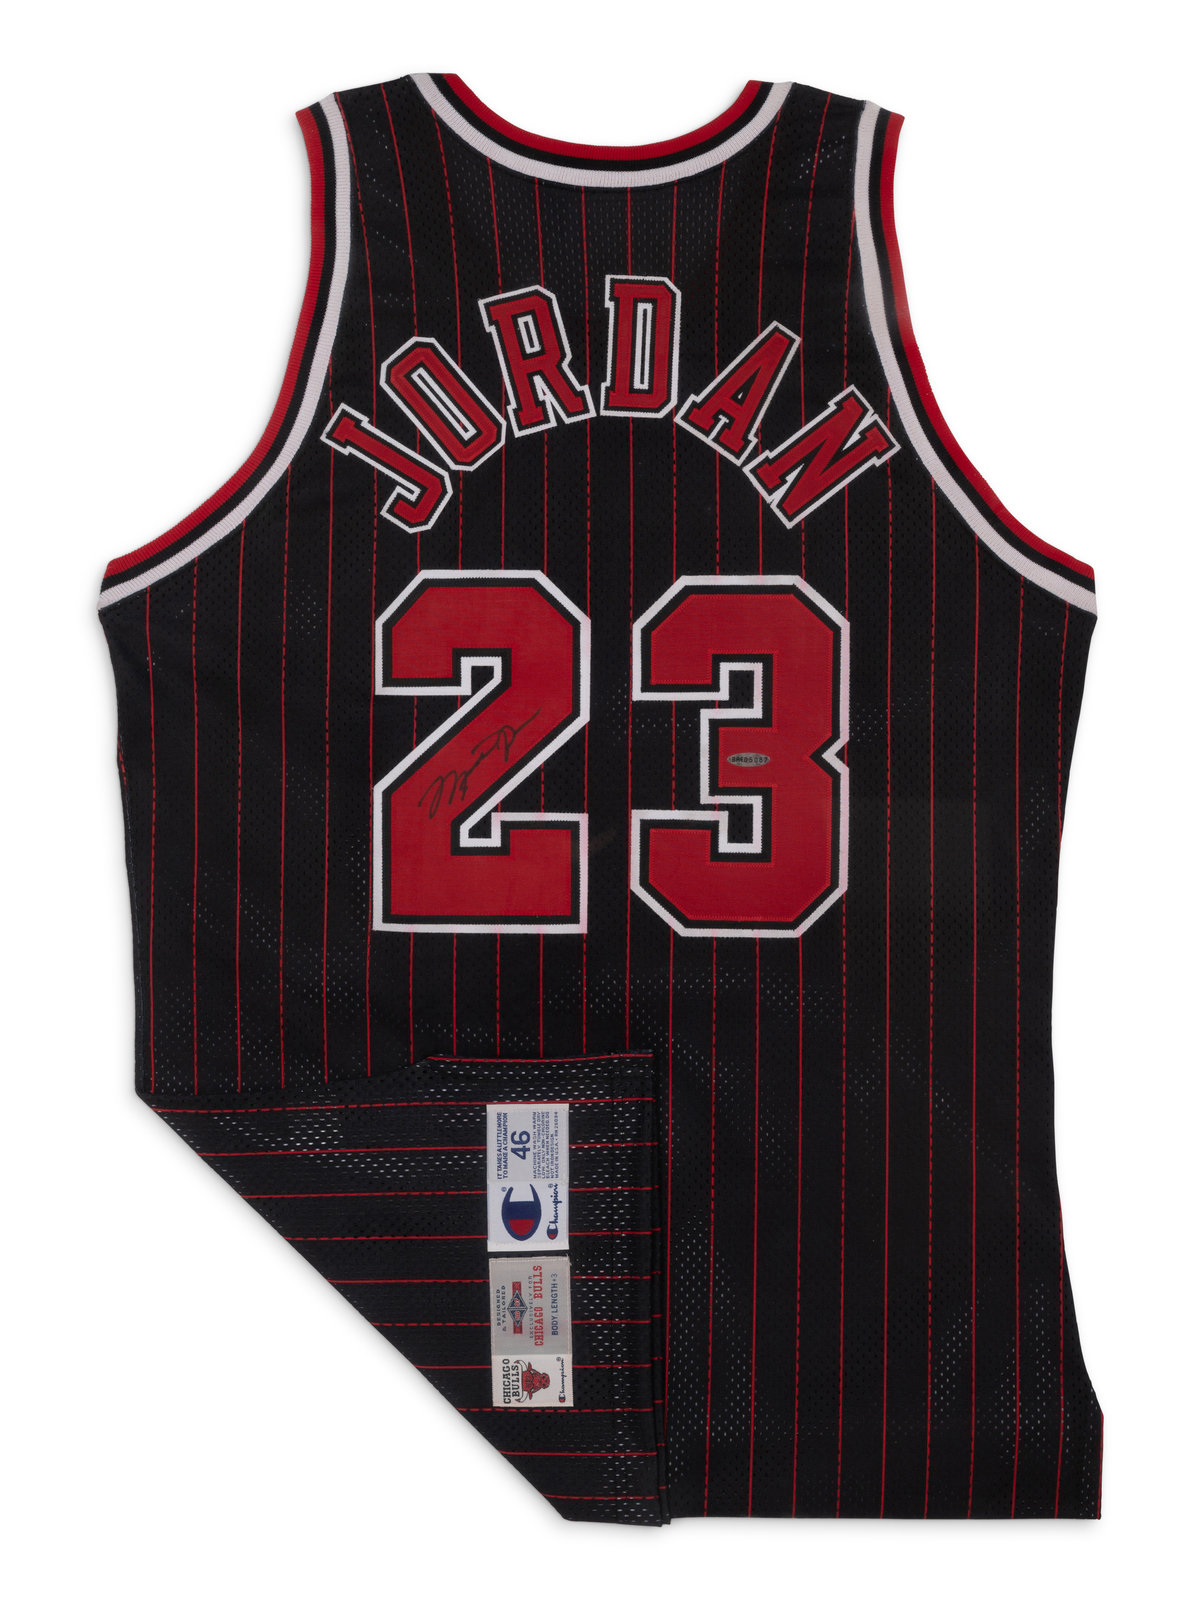 Champion Chicago Bulls 96-97 Team signed Michael Jordan Jersey!!